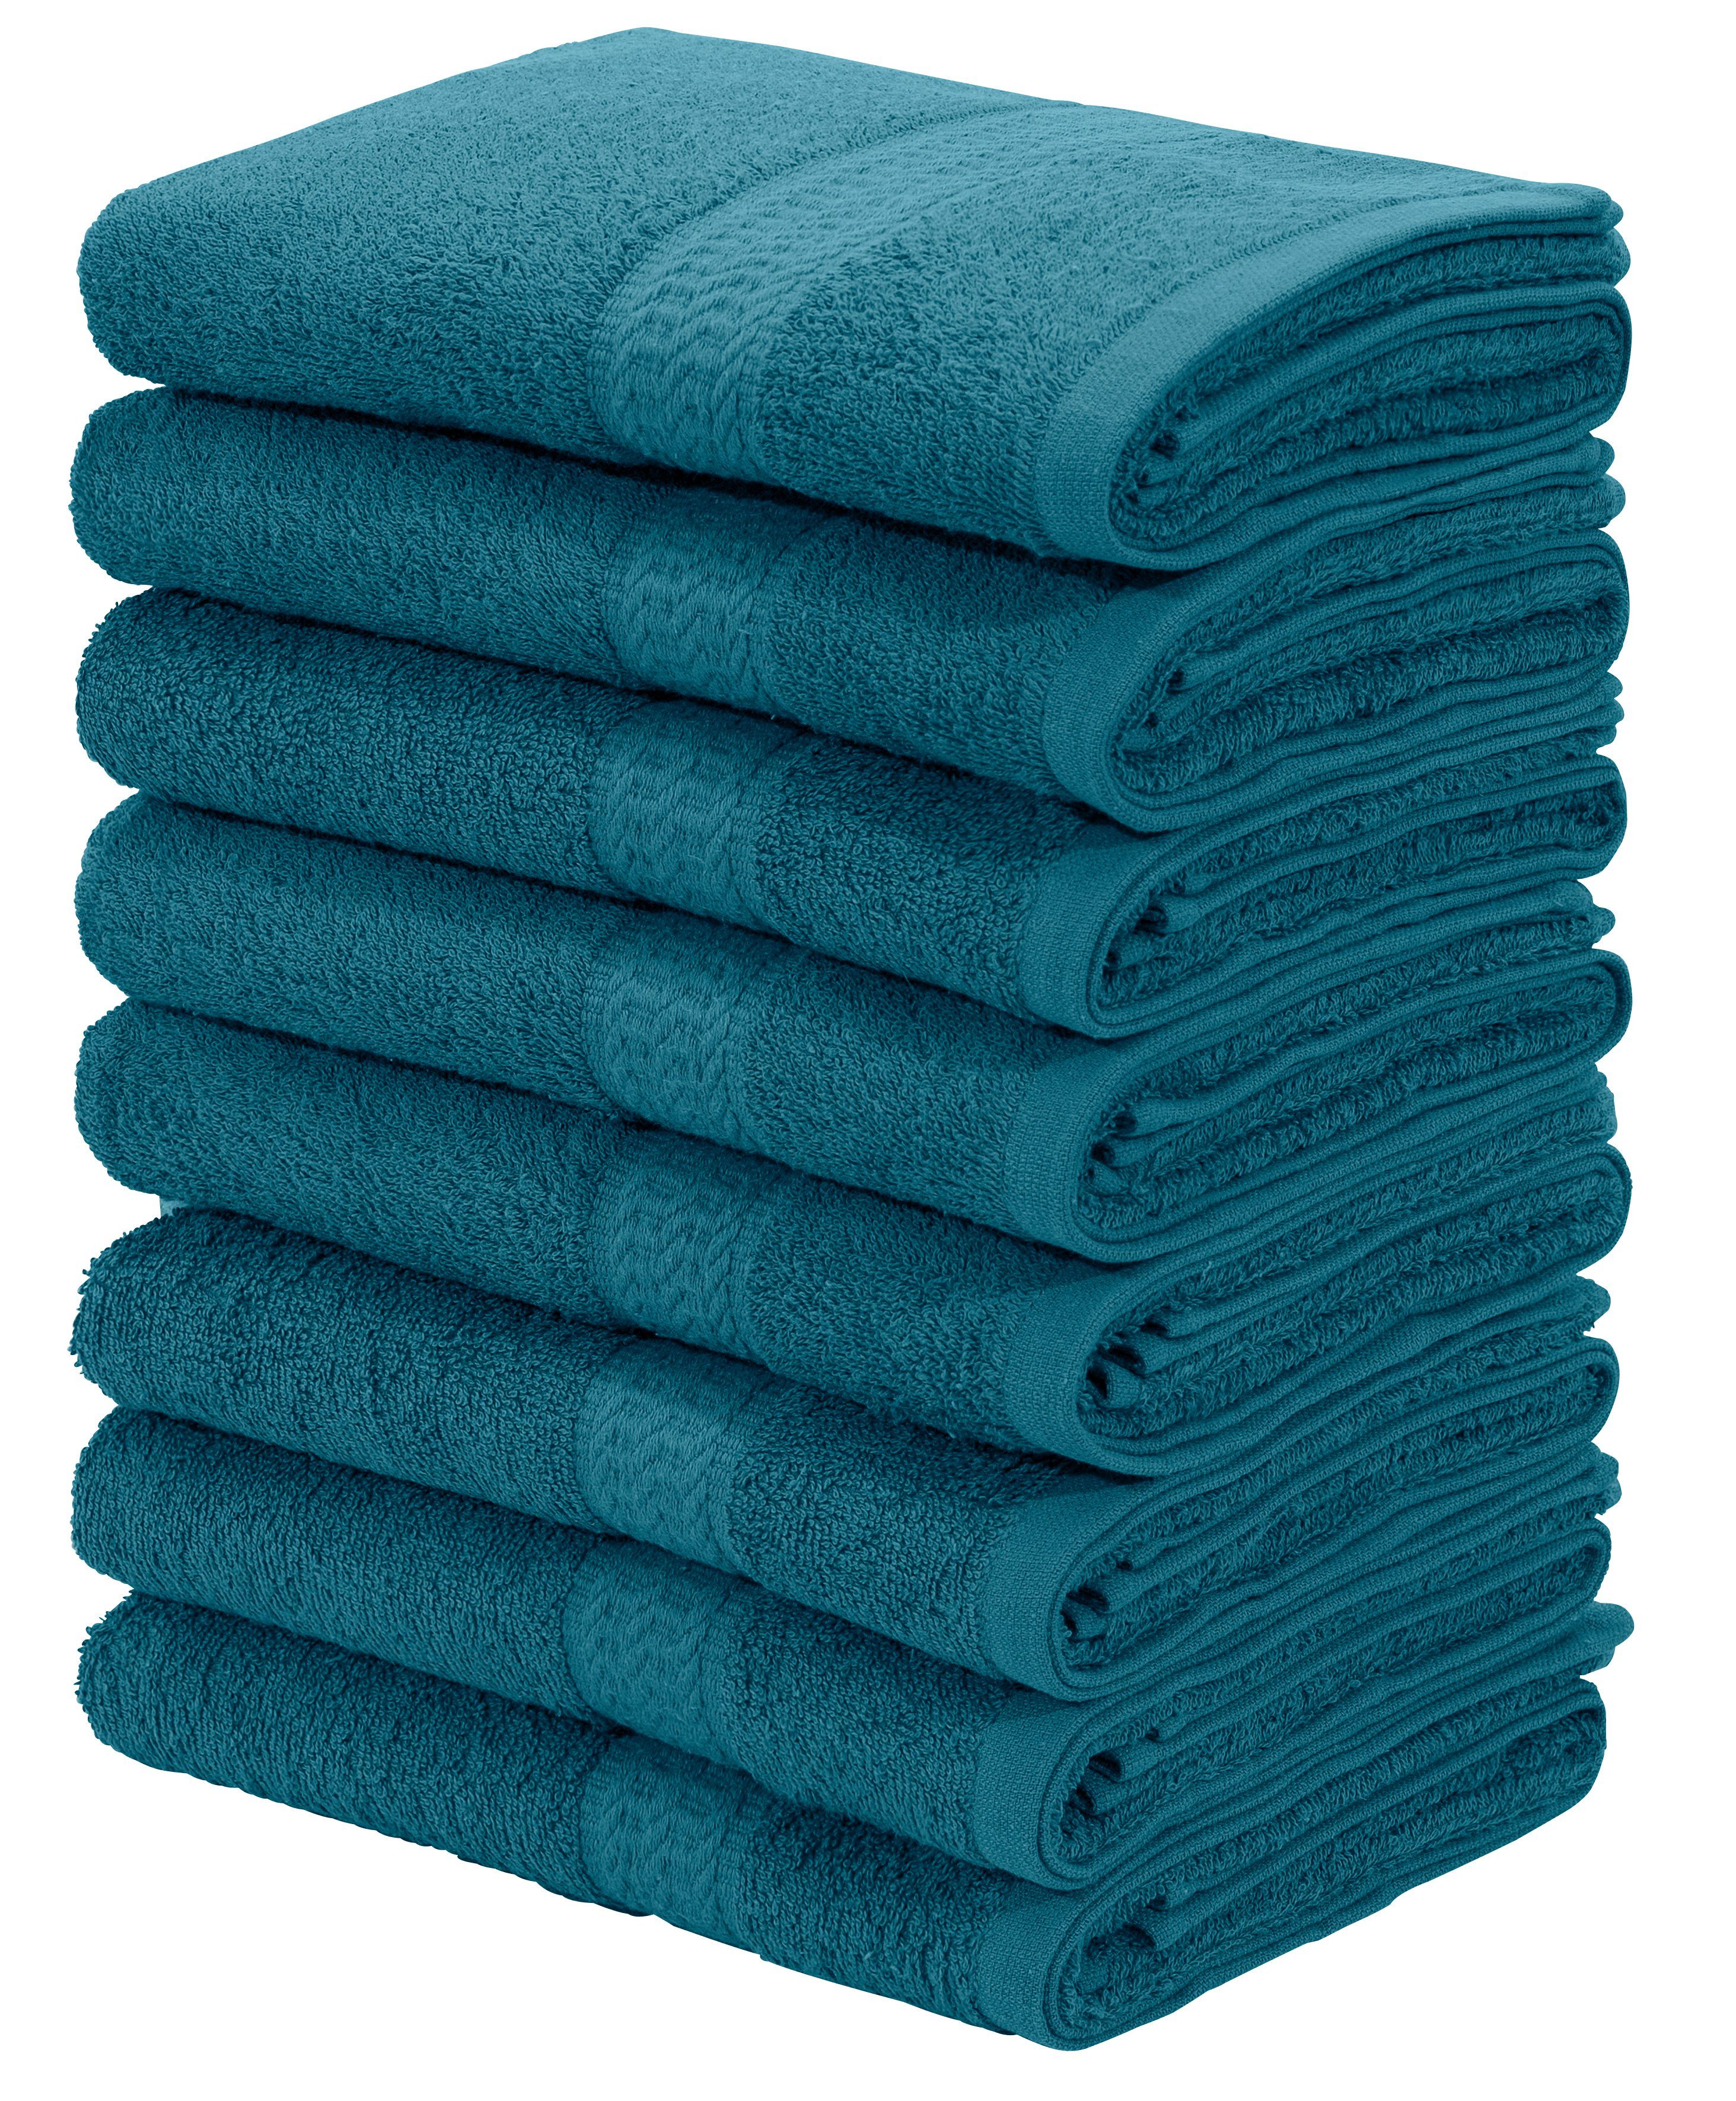 Aqua Handtücher online kaufen | OTTO